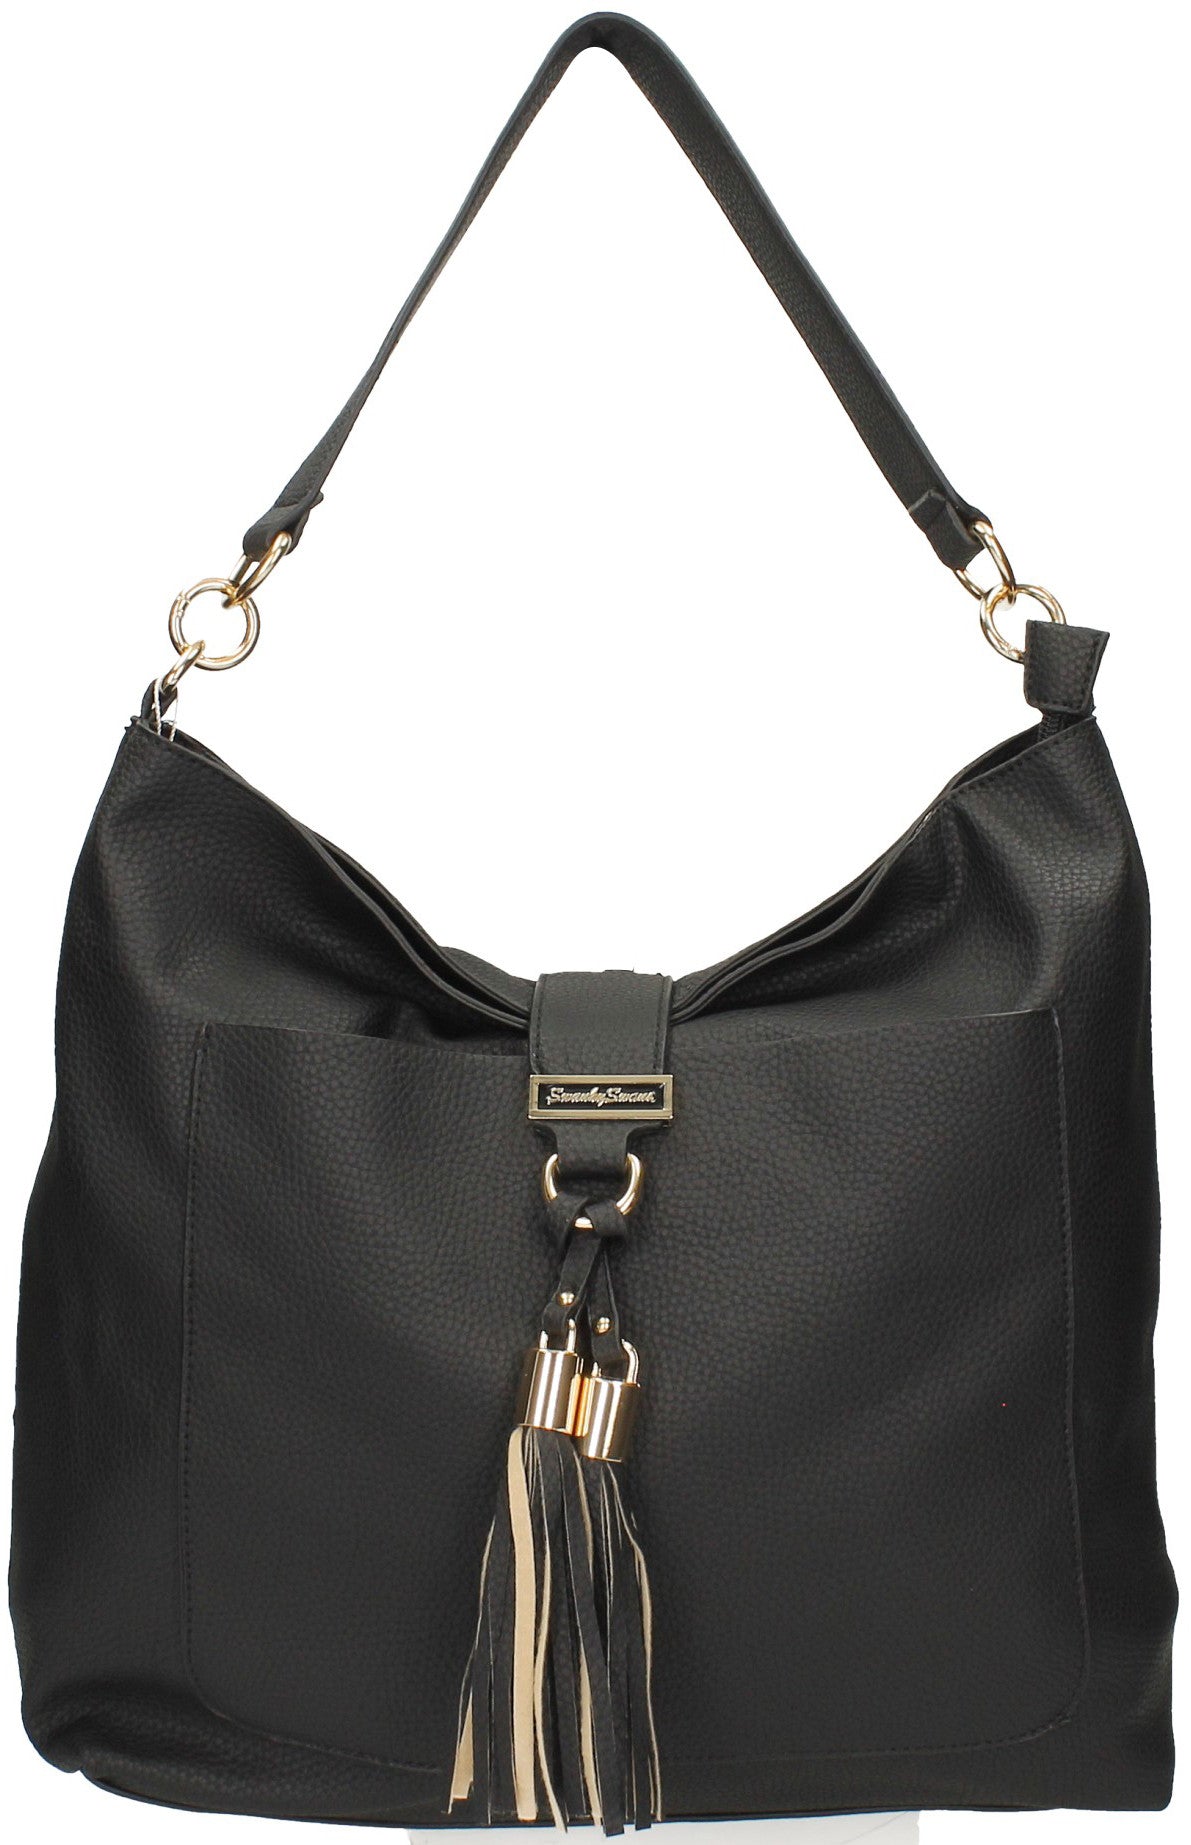 PU Leather mini small shoulder bag Ladies Handbag Black | eBay